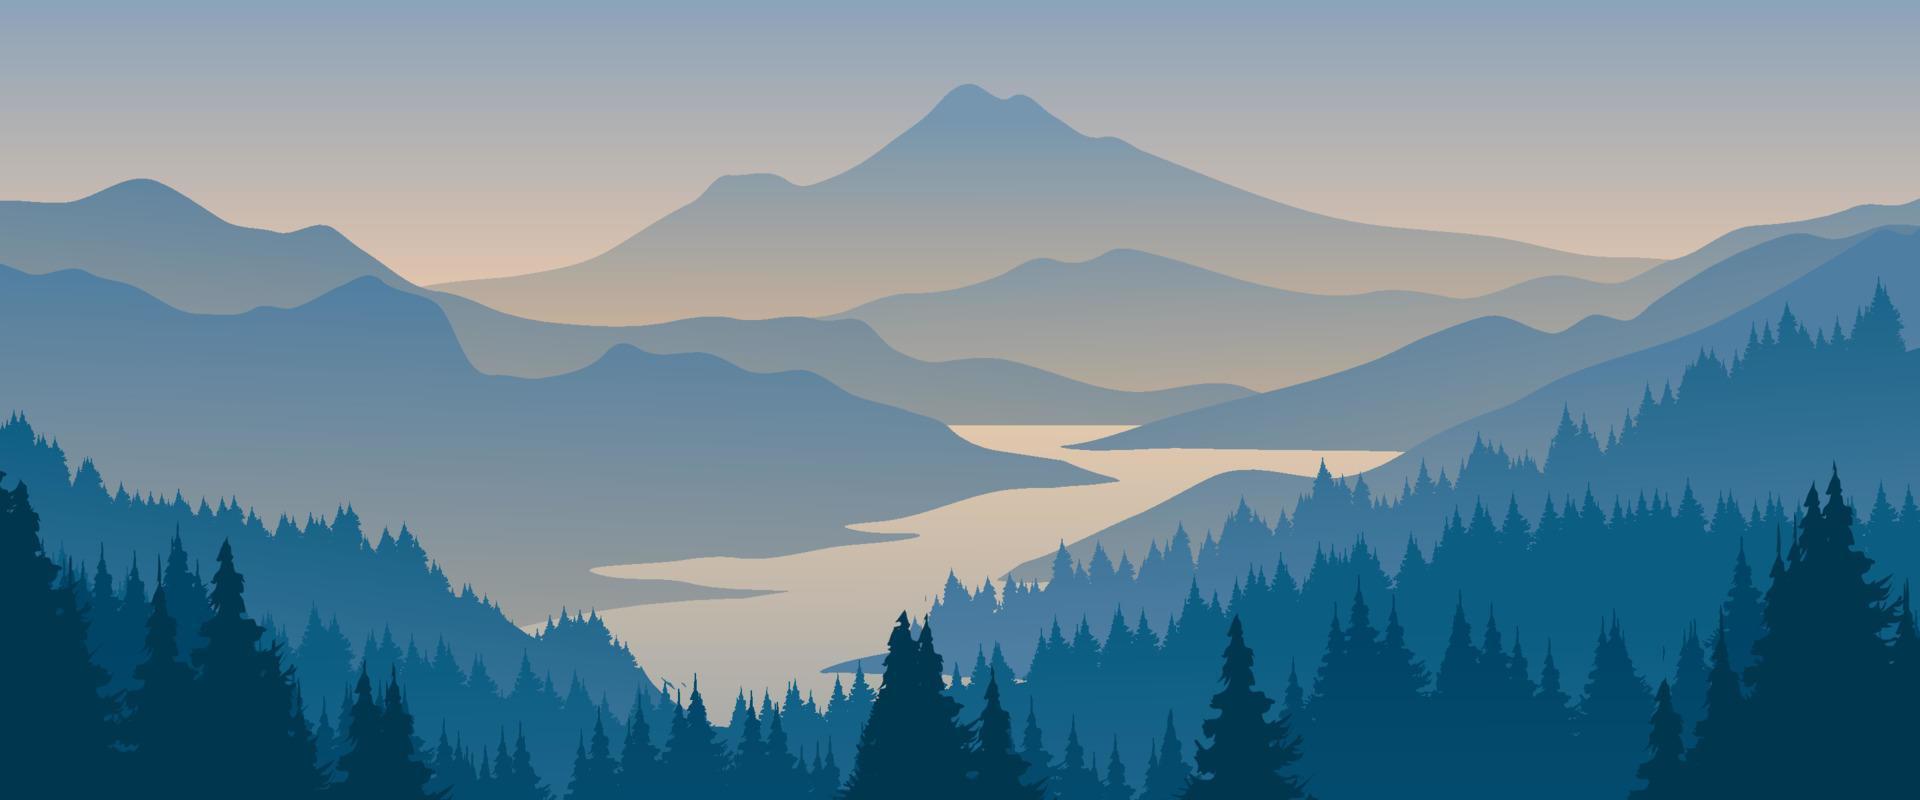 ilustración de paisaje de montaña vectorial con lago y bosque. paisaje de silueta de montaña brumosa vector